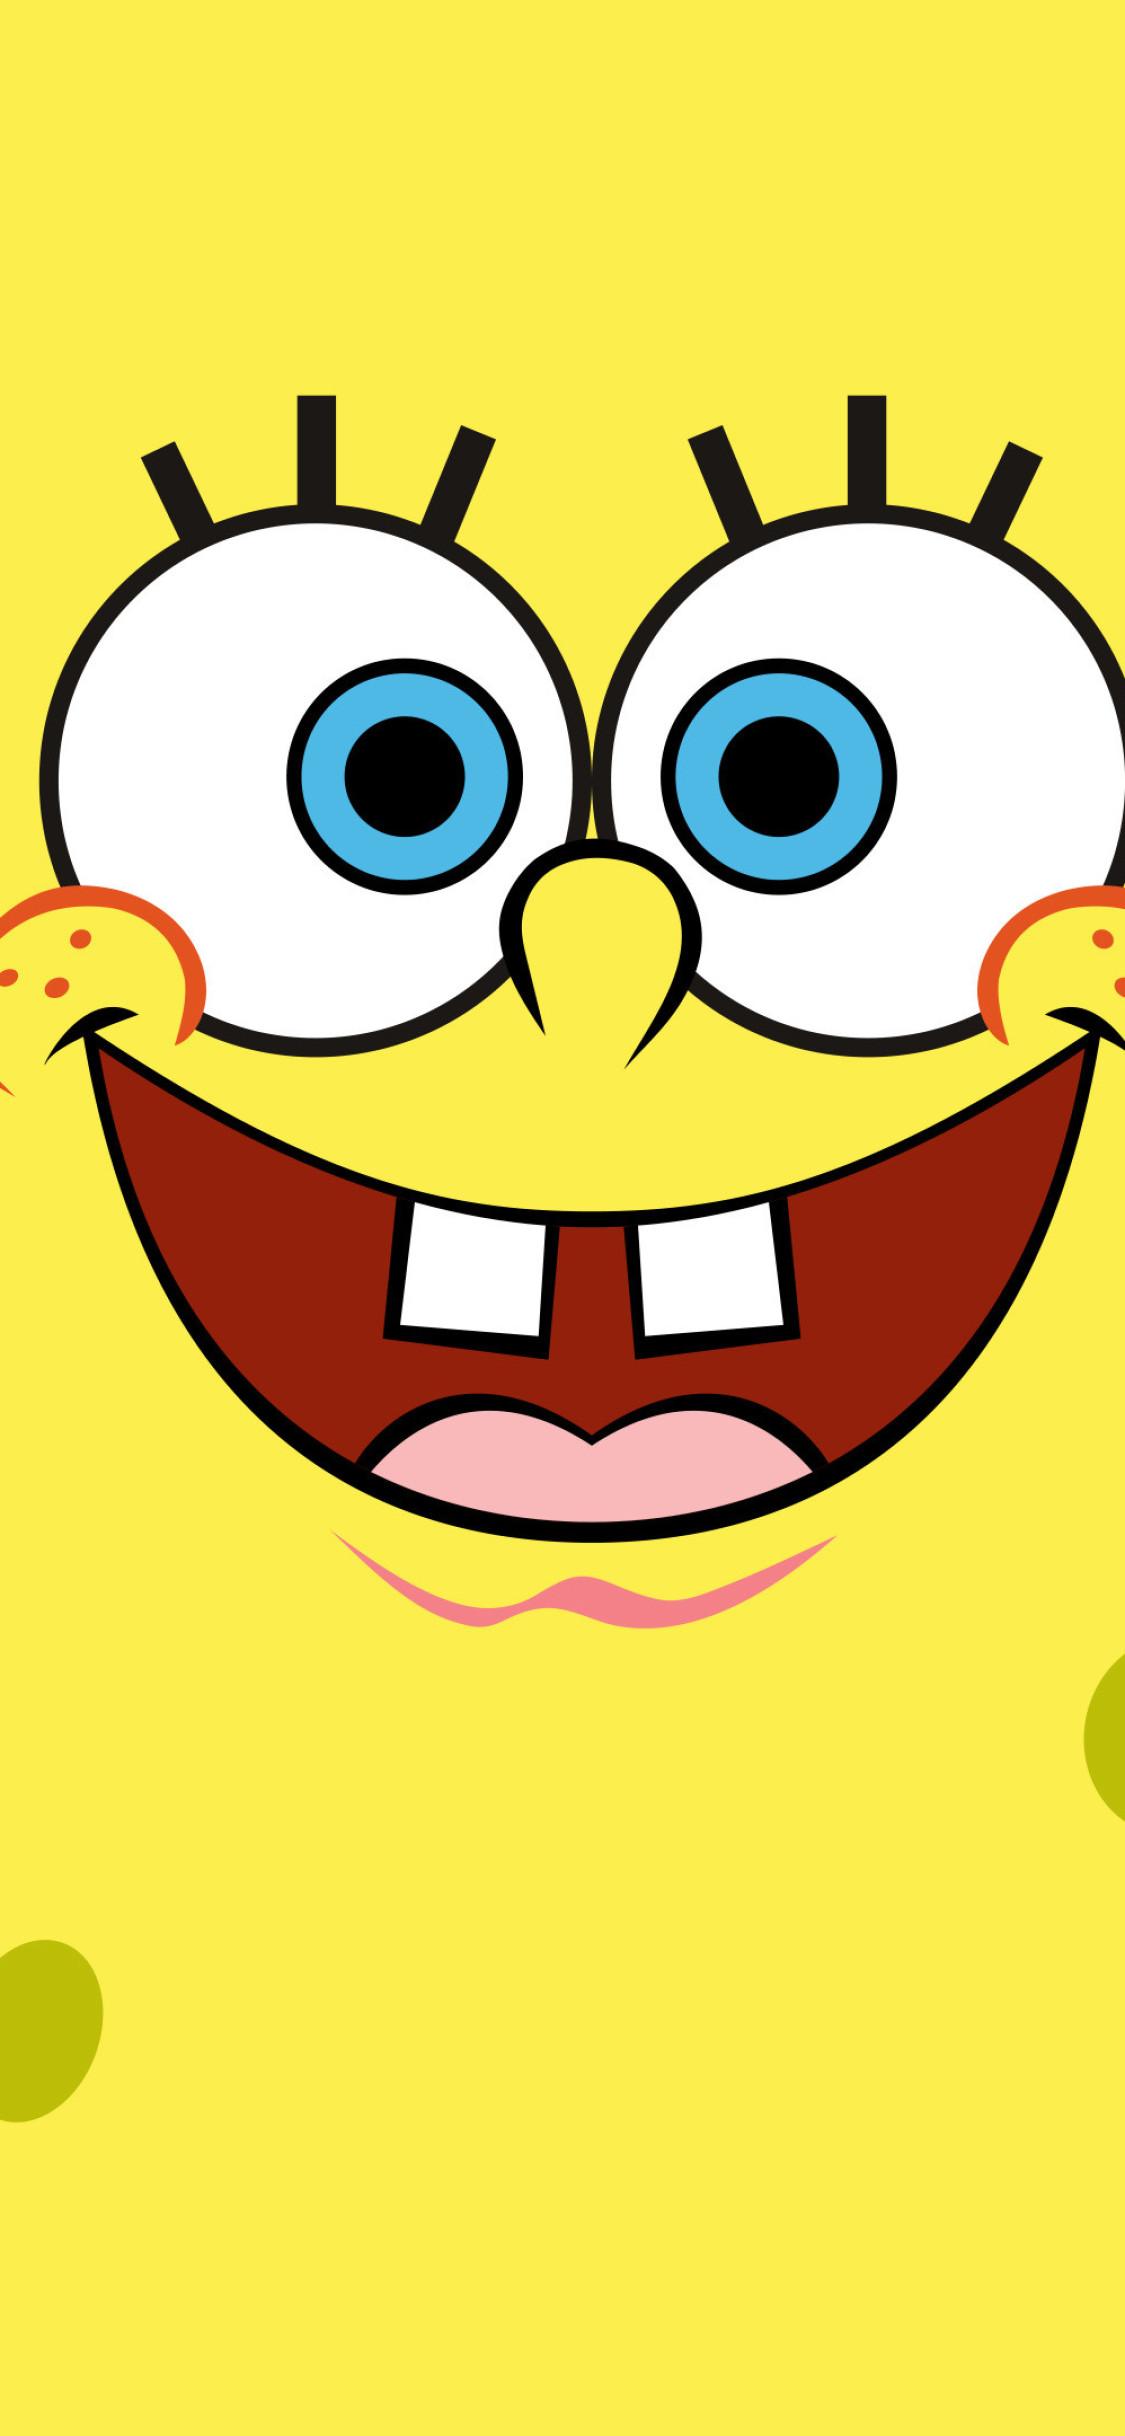 Spongebob Squarepants Minimalist 4k iPhone XS, iPhone 10